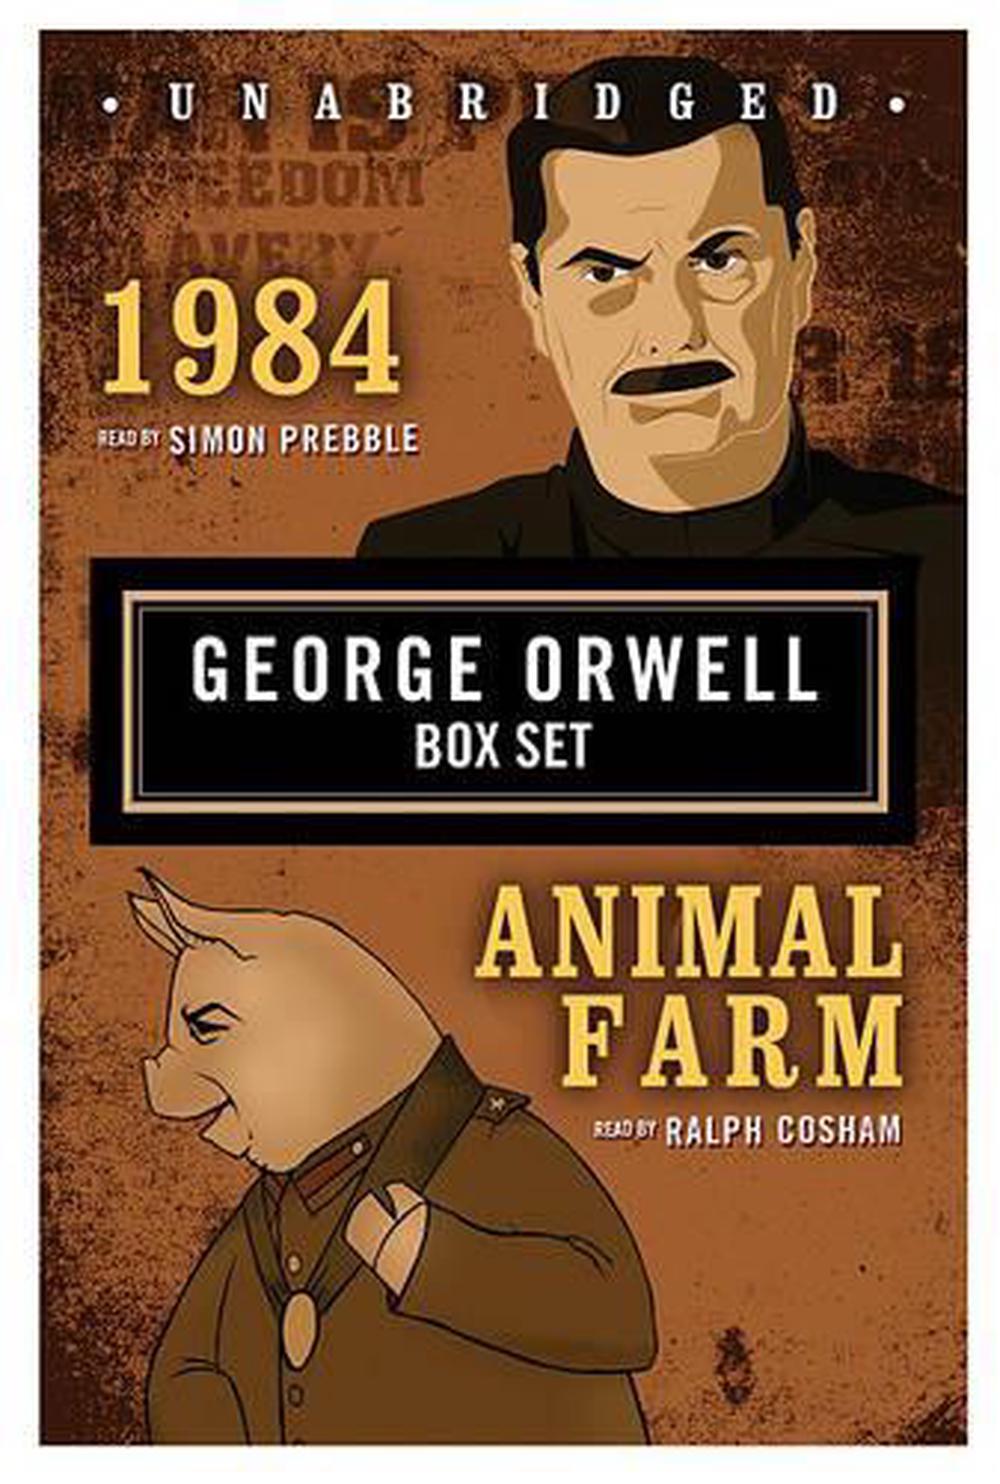 1984 and animal farm